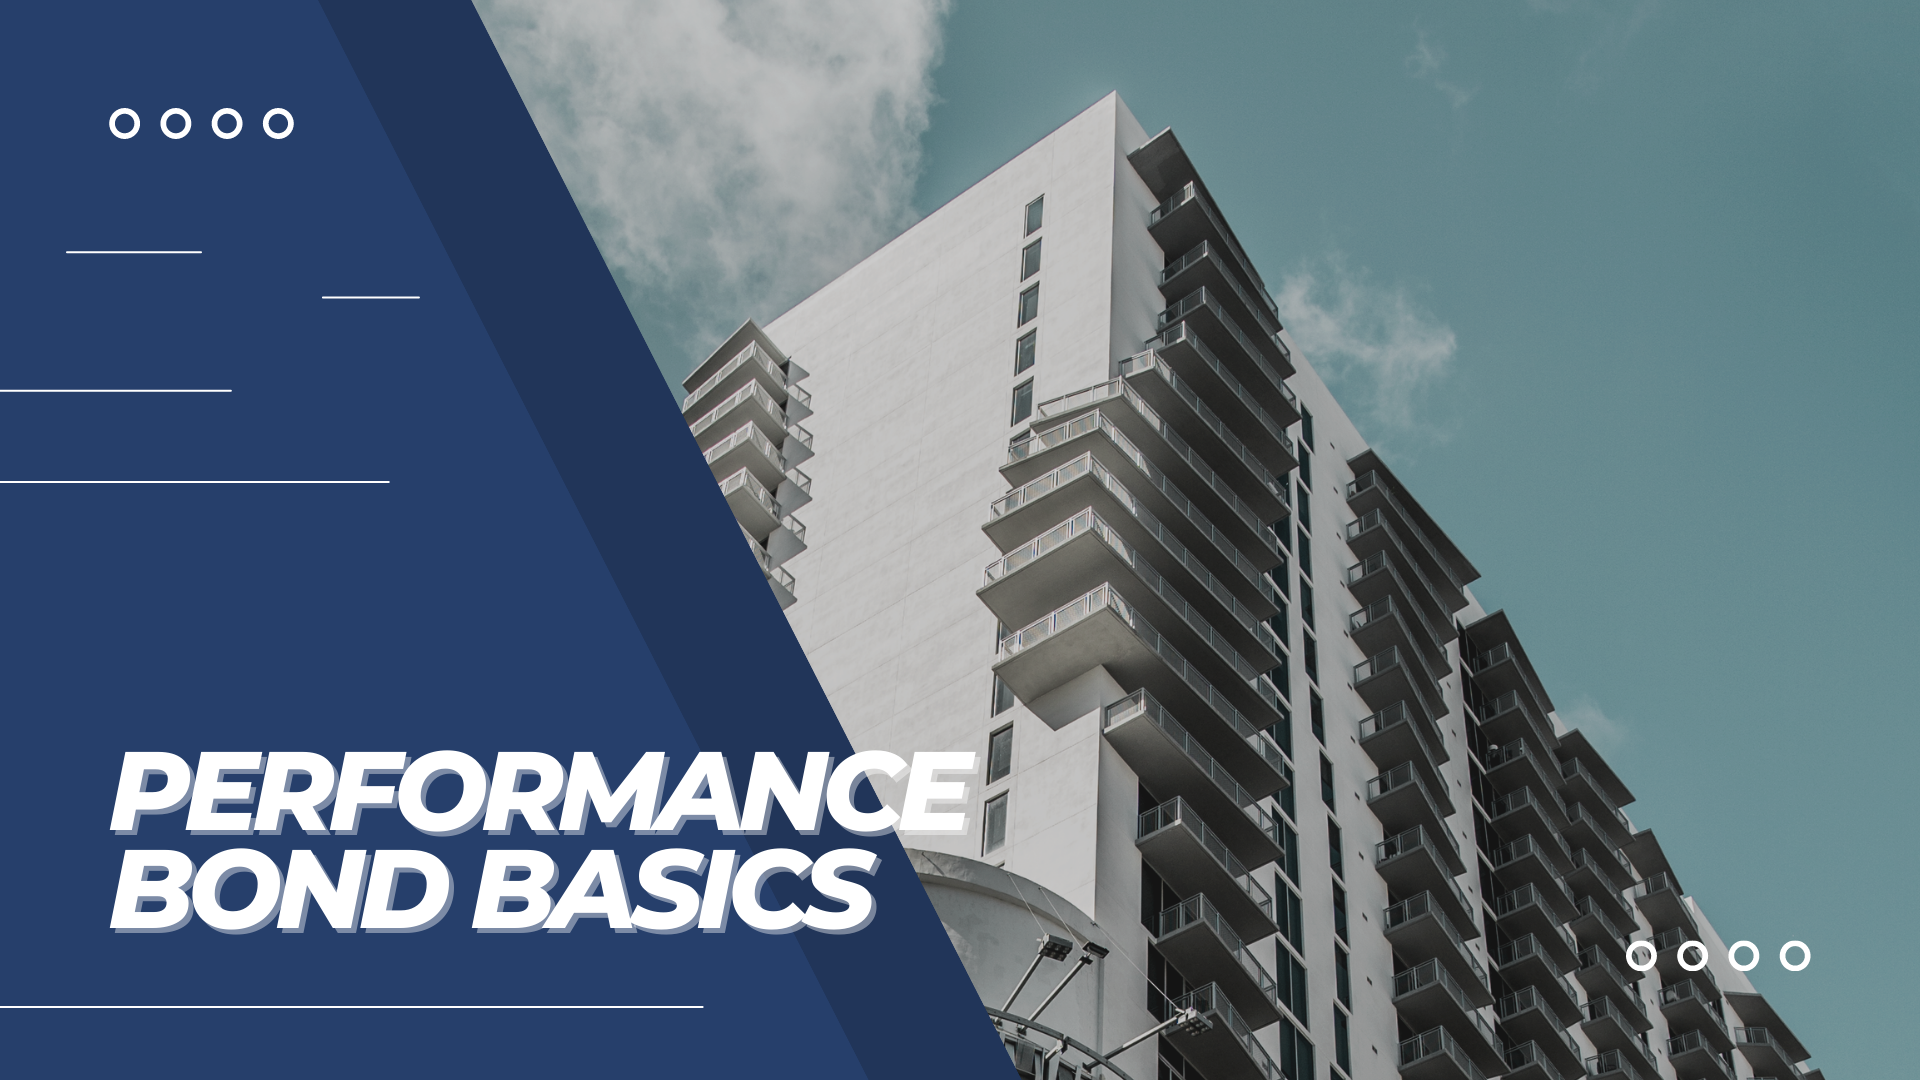 Performance bond basics